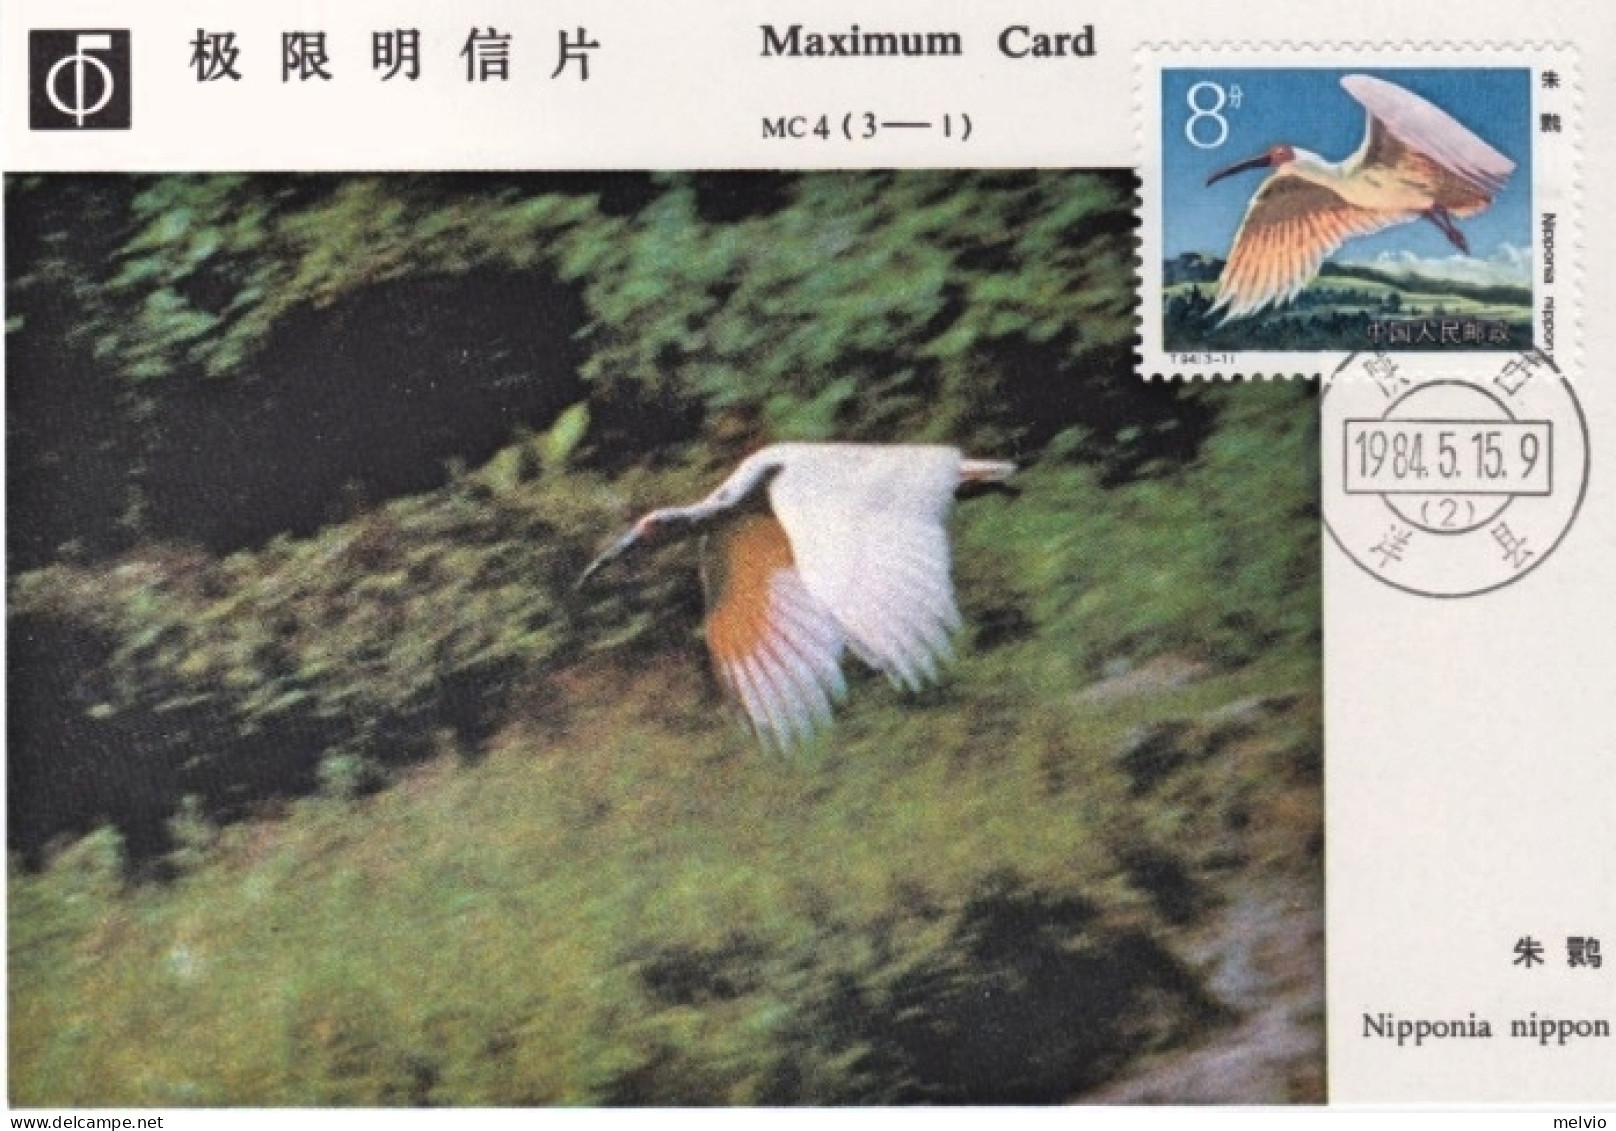 1984-Cina China MC4, Ibis Maximum Cards - Covers & Documents